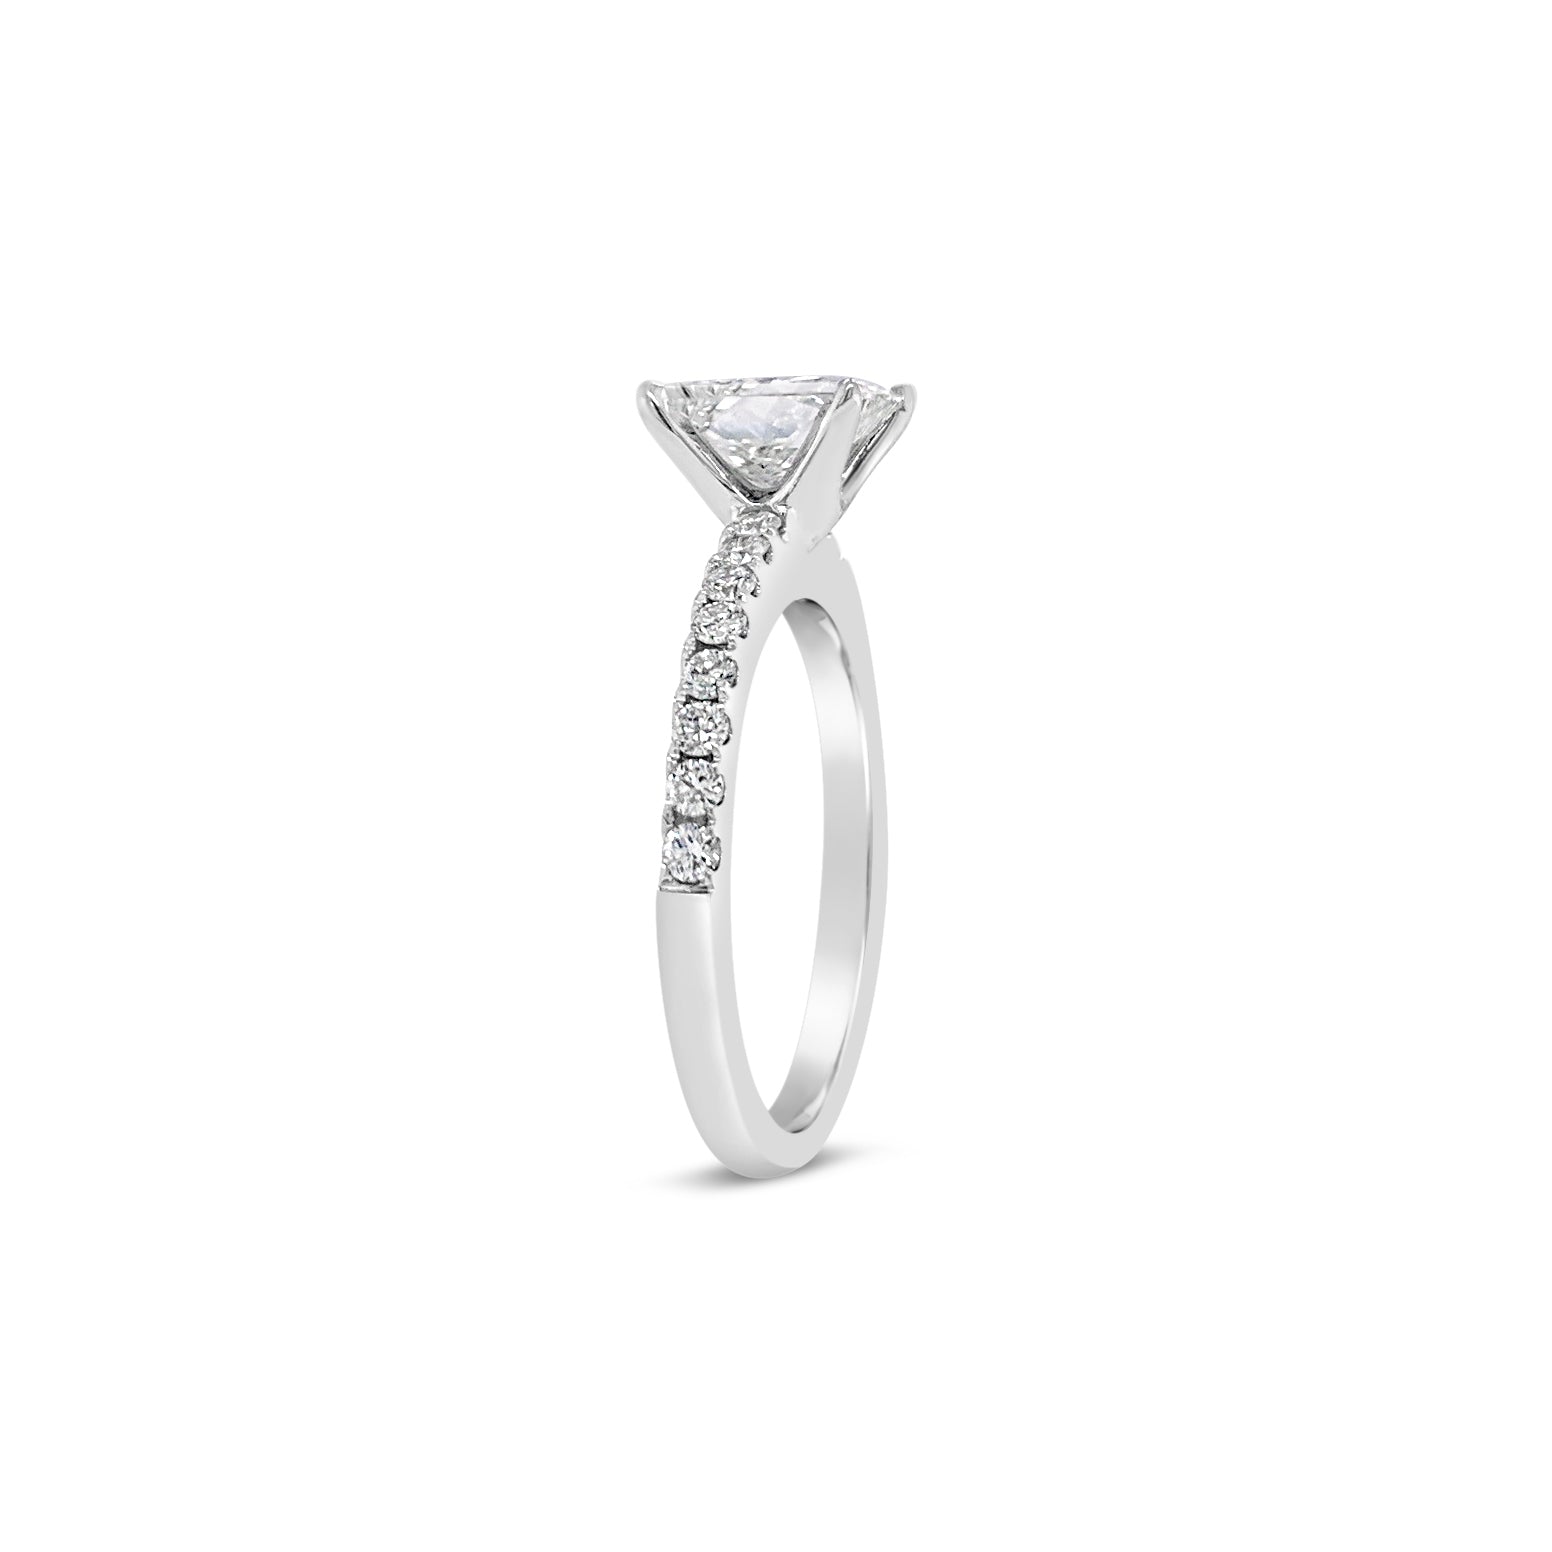 Princess-Cut Diamond Engagement Ring with Diamond Shank  -18K weighting 3.90 GR  - 16 round diamonds totaling 0.35 carats